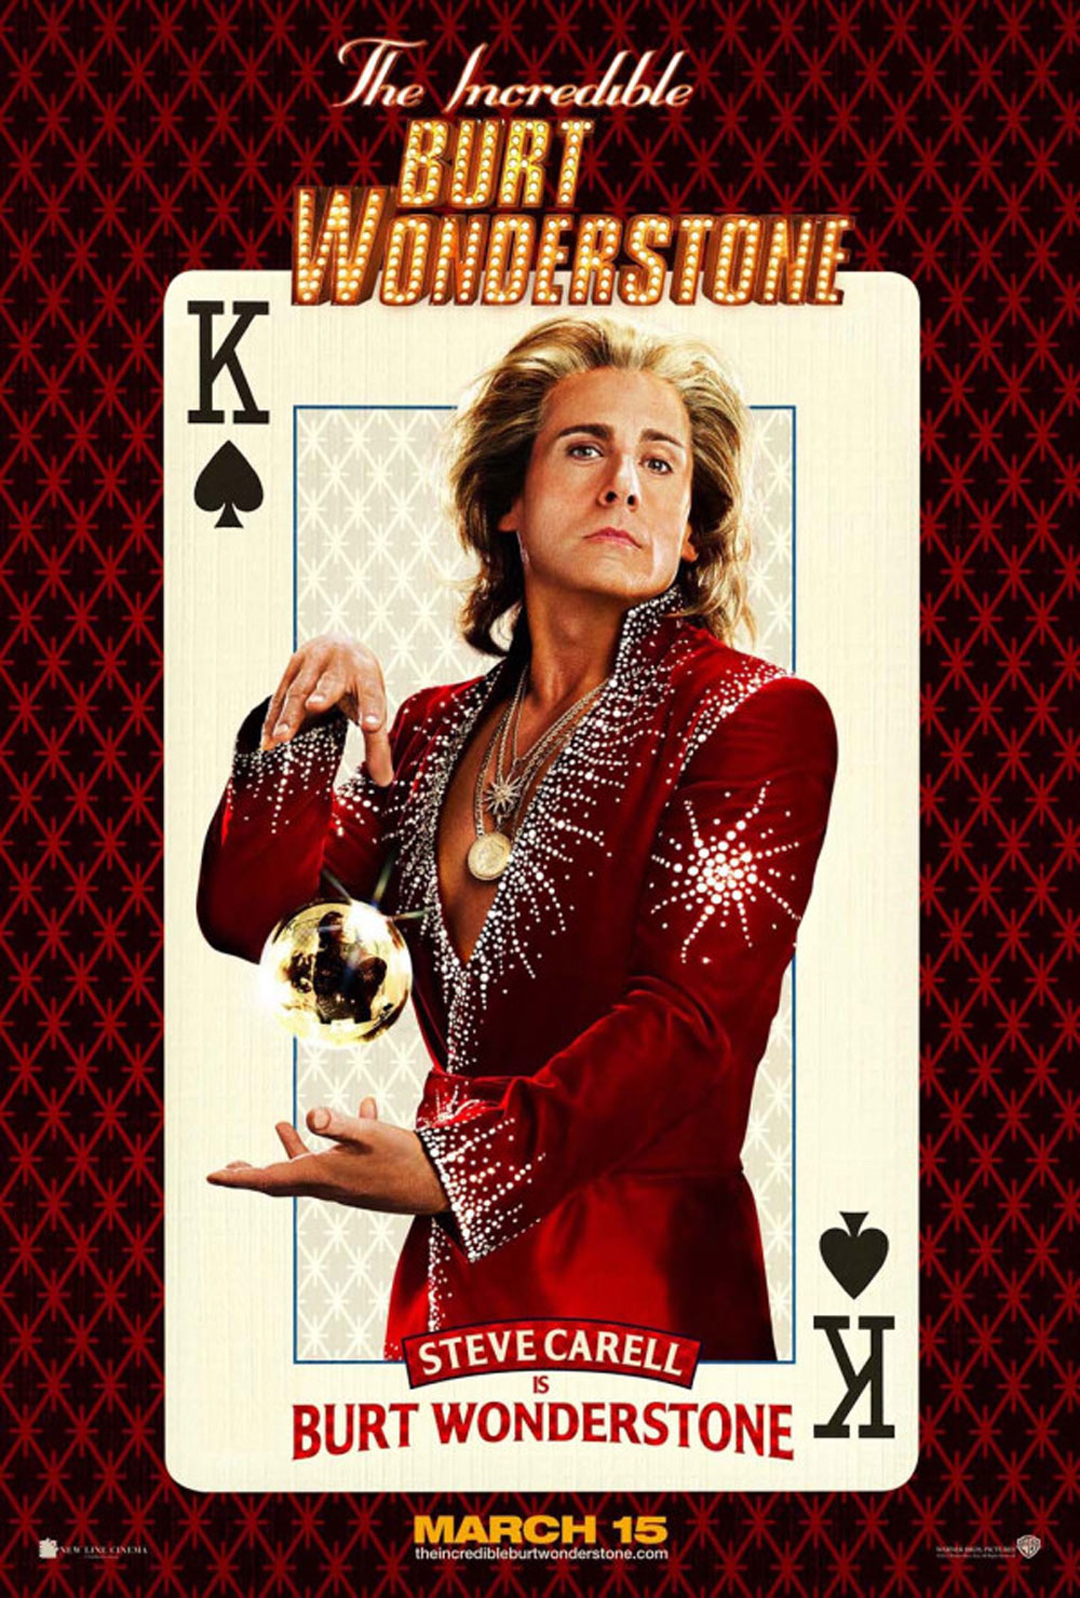 The Incredible Burt Wonderstone - Movie Poster #6 (Original)